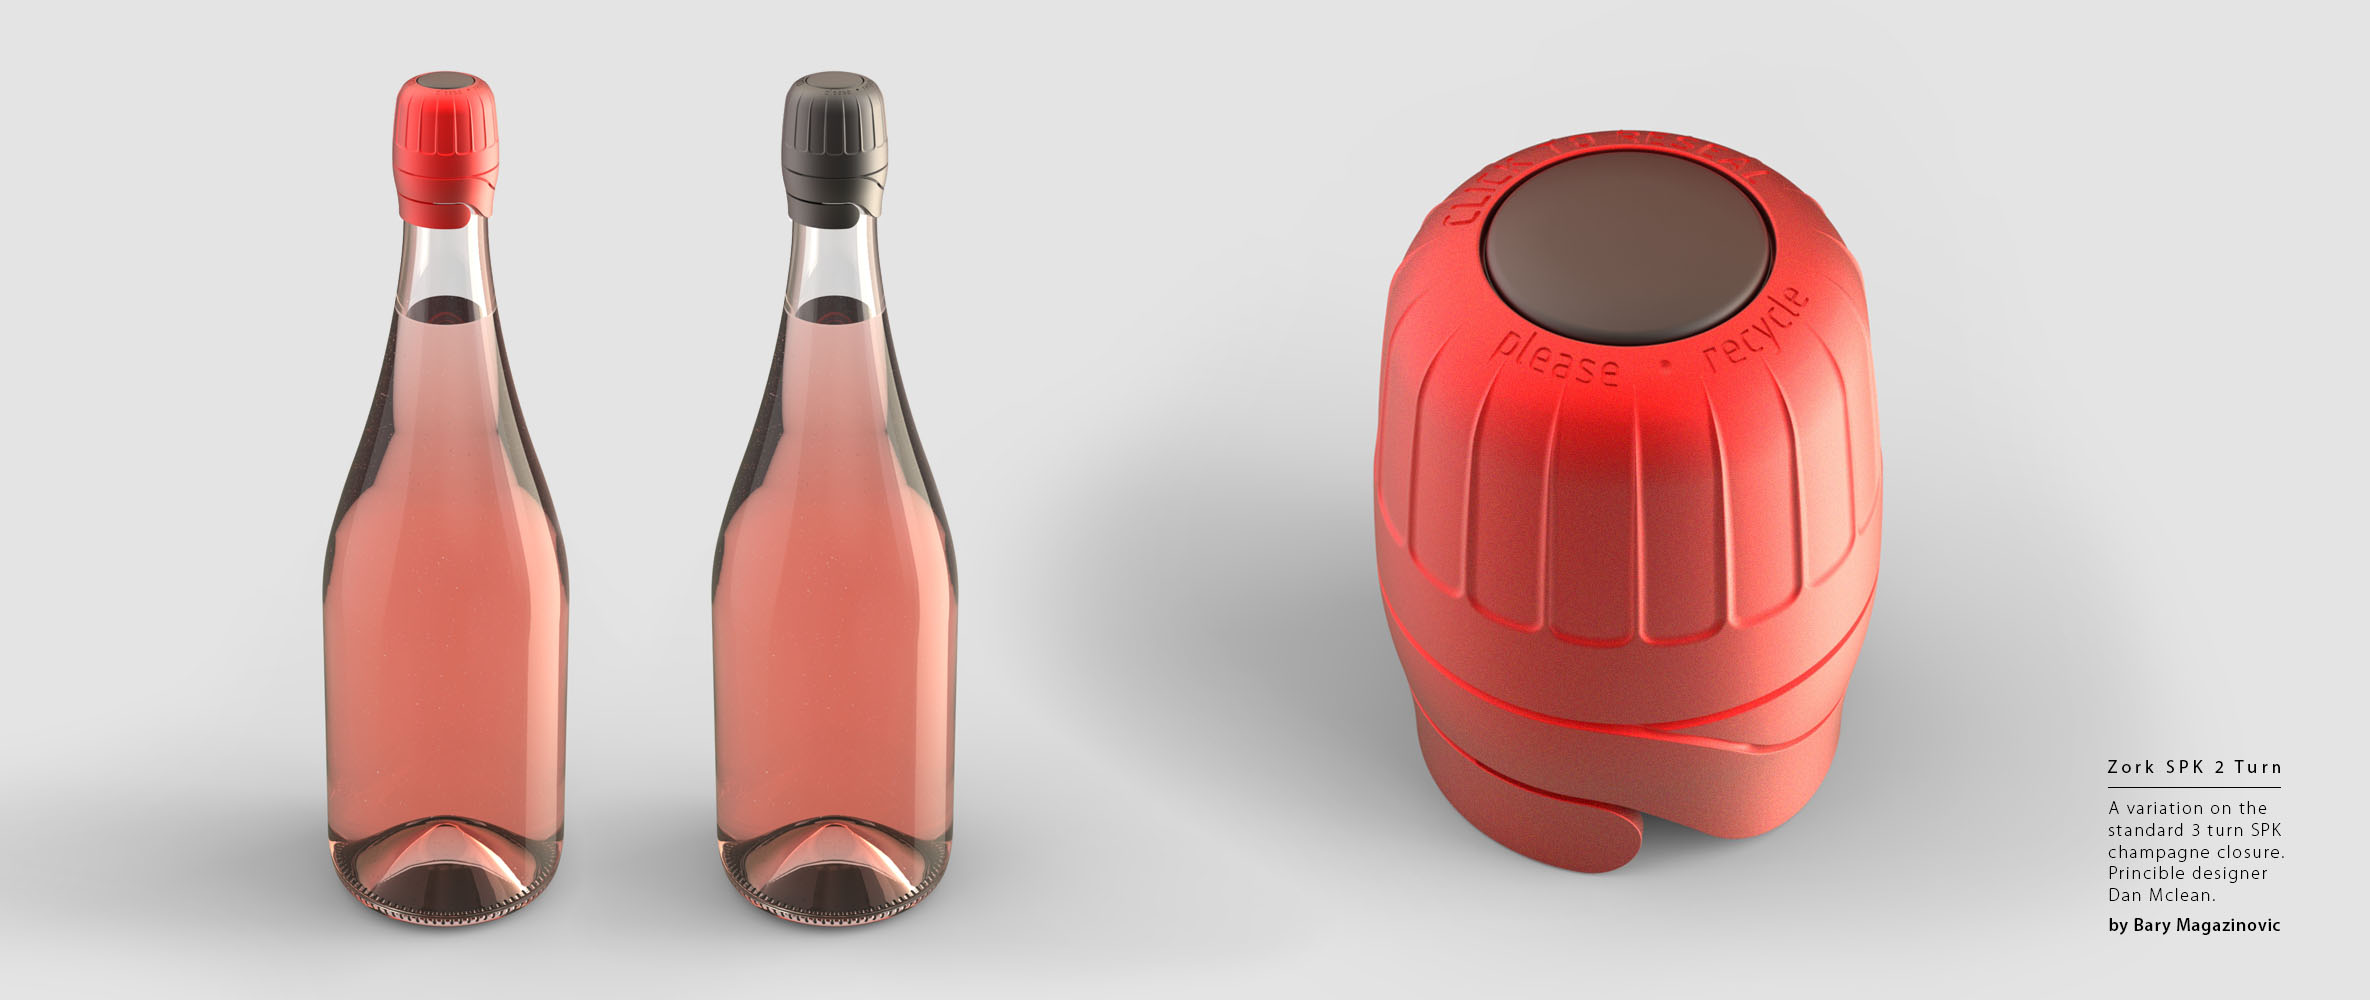 Australian Product Design Industrial Design Zork Wine closure 2 turn SPK sparkling champagne by Barry Magazinovic